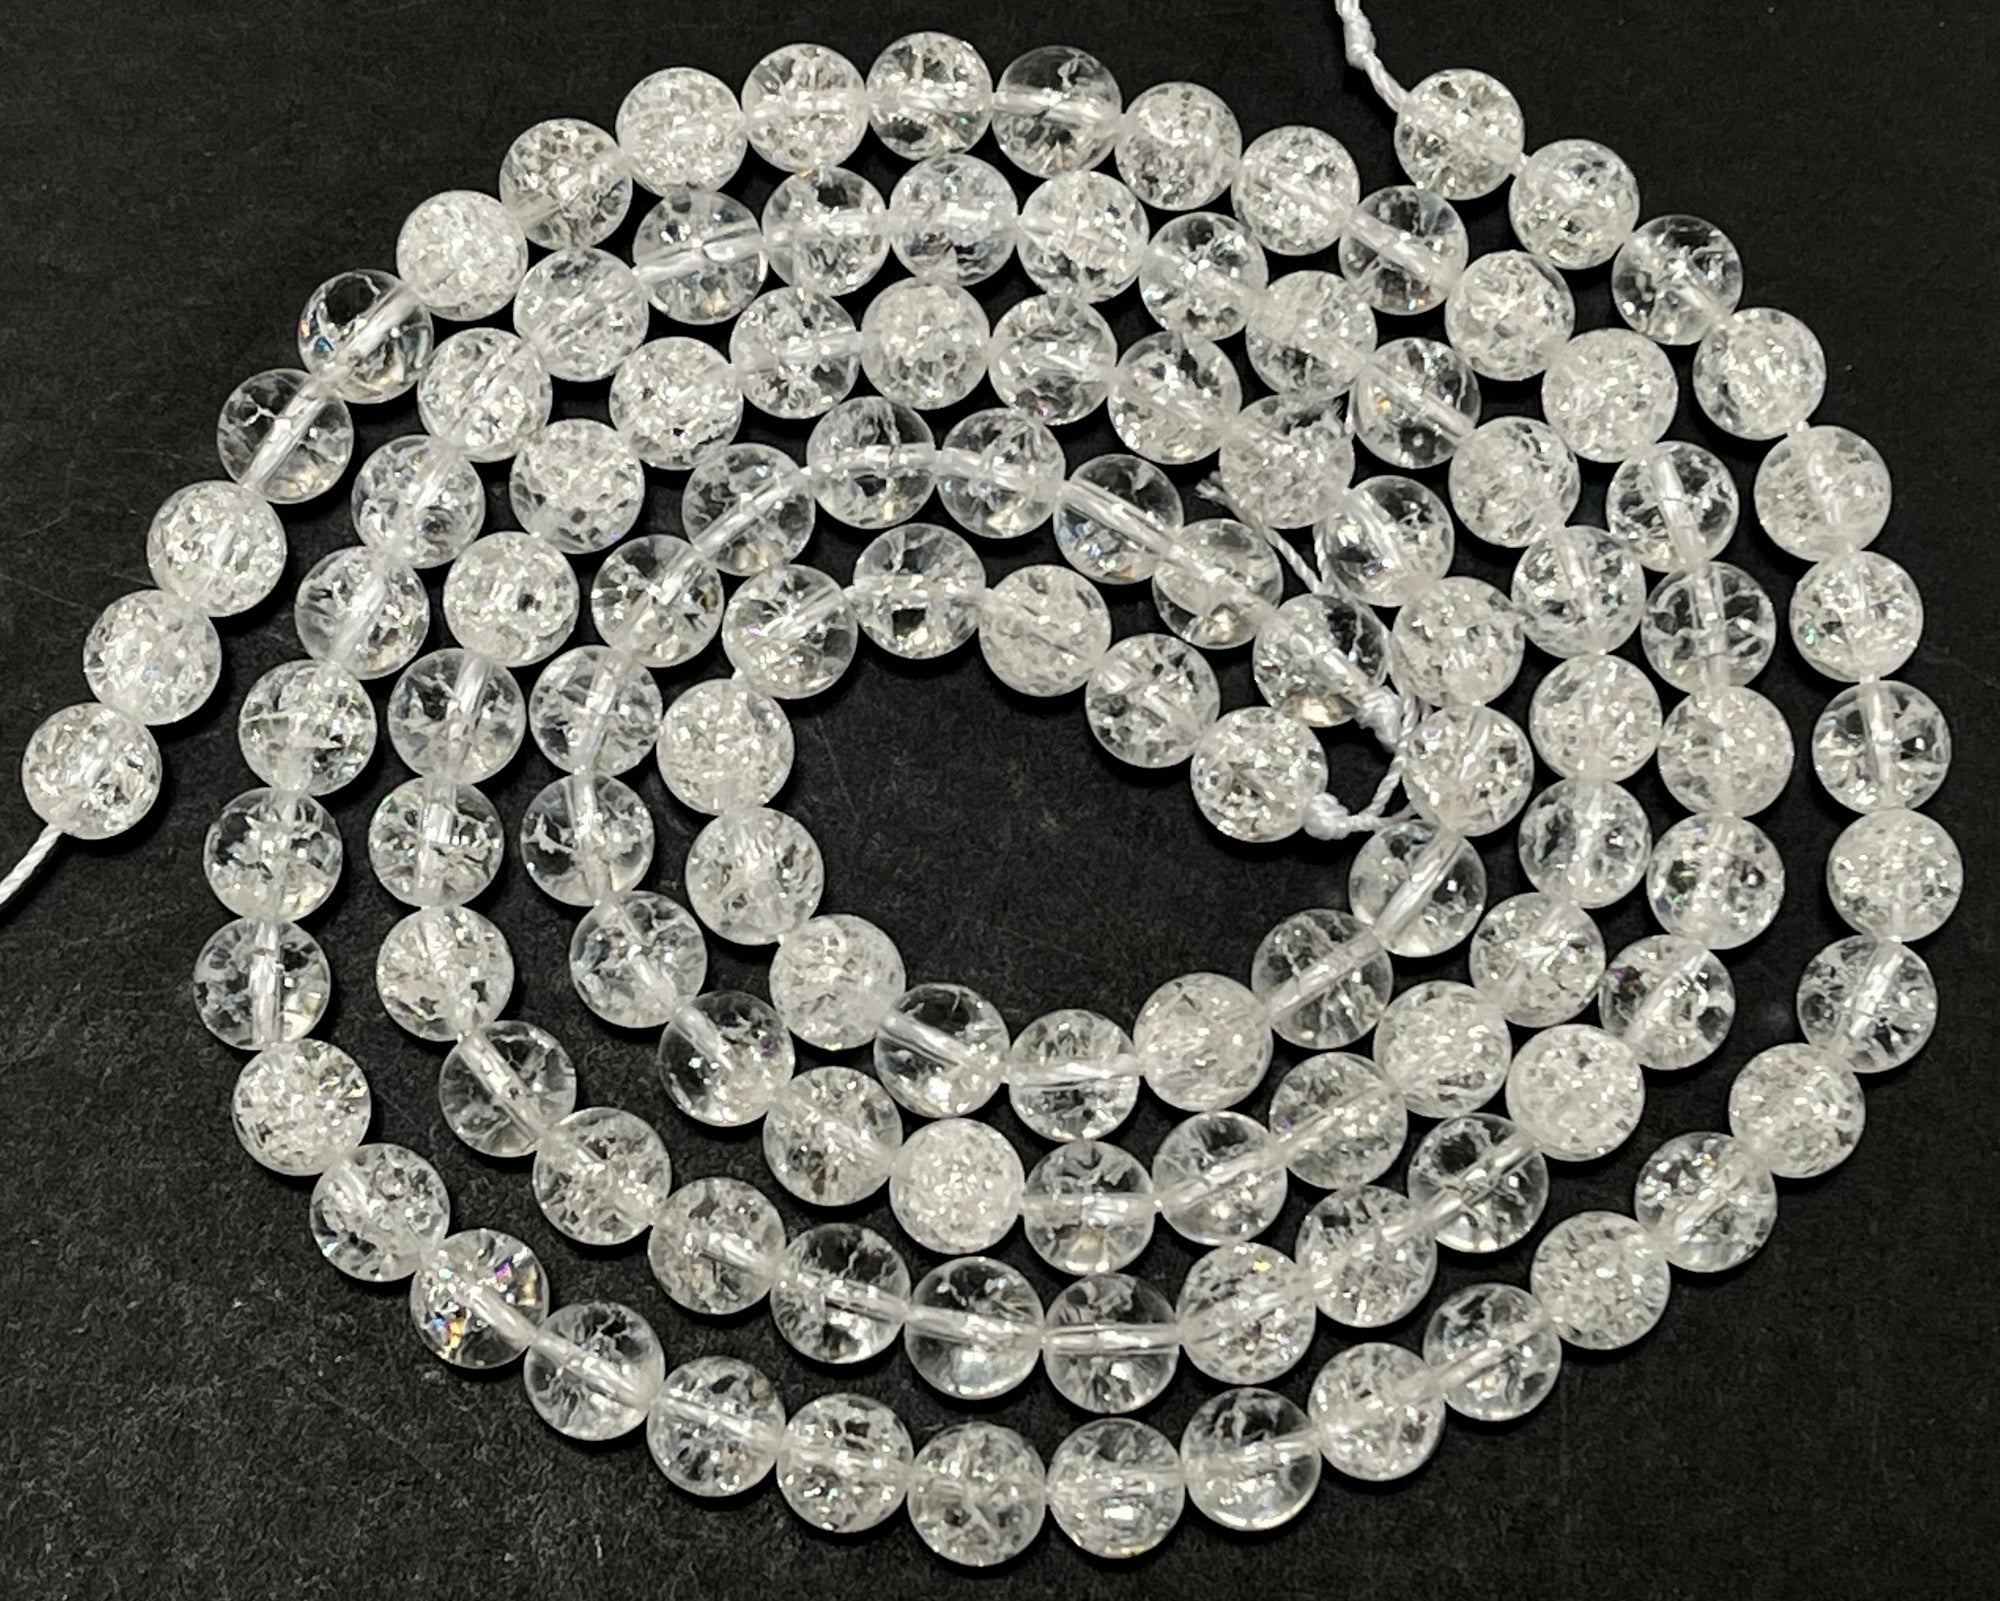 Cracked Quartz 6mm round natural rock crystal beads 15" strand - Oz Beads 